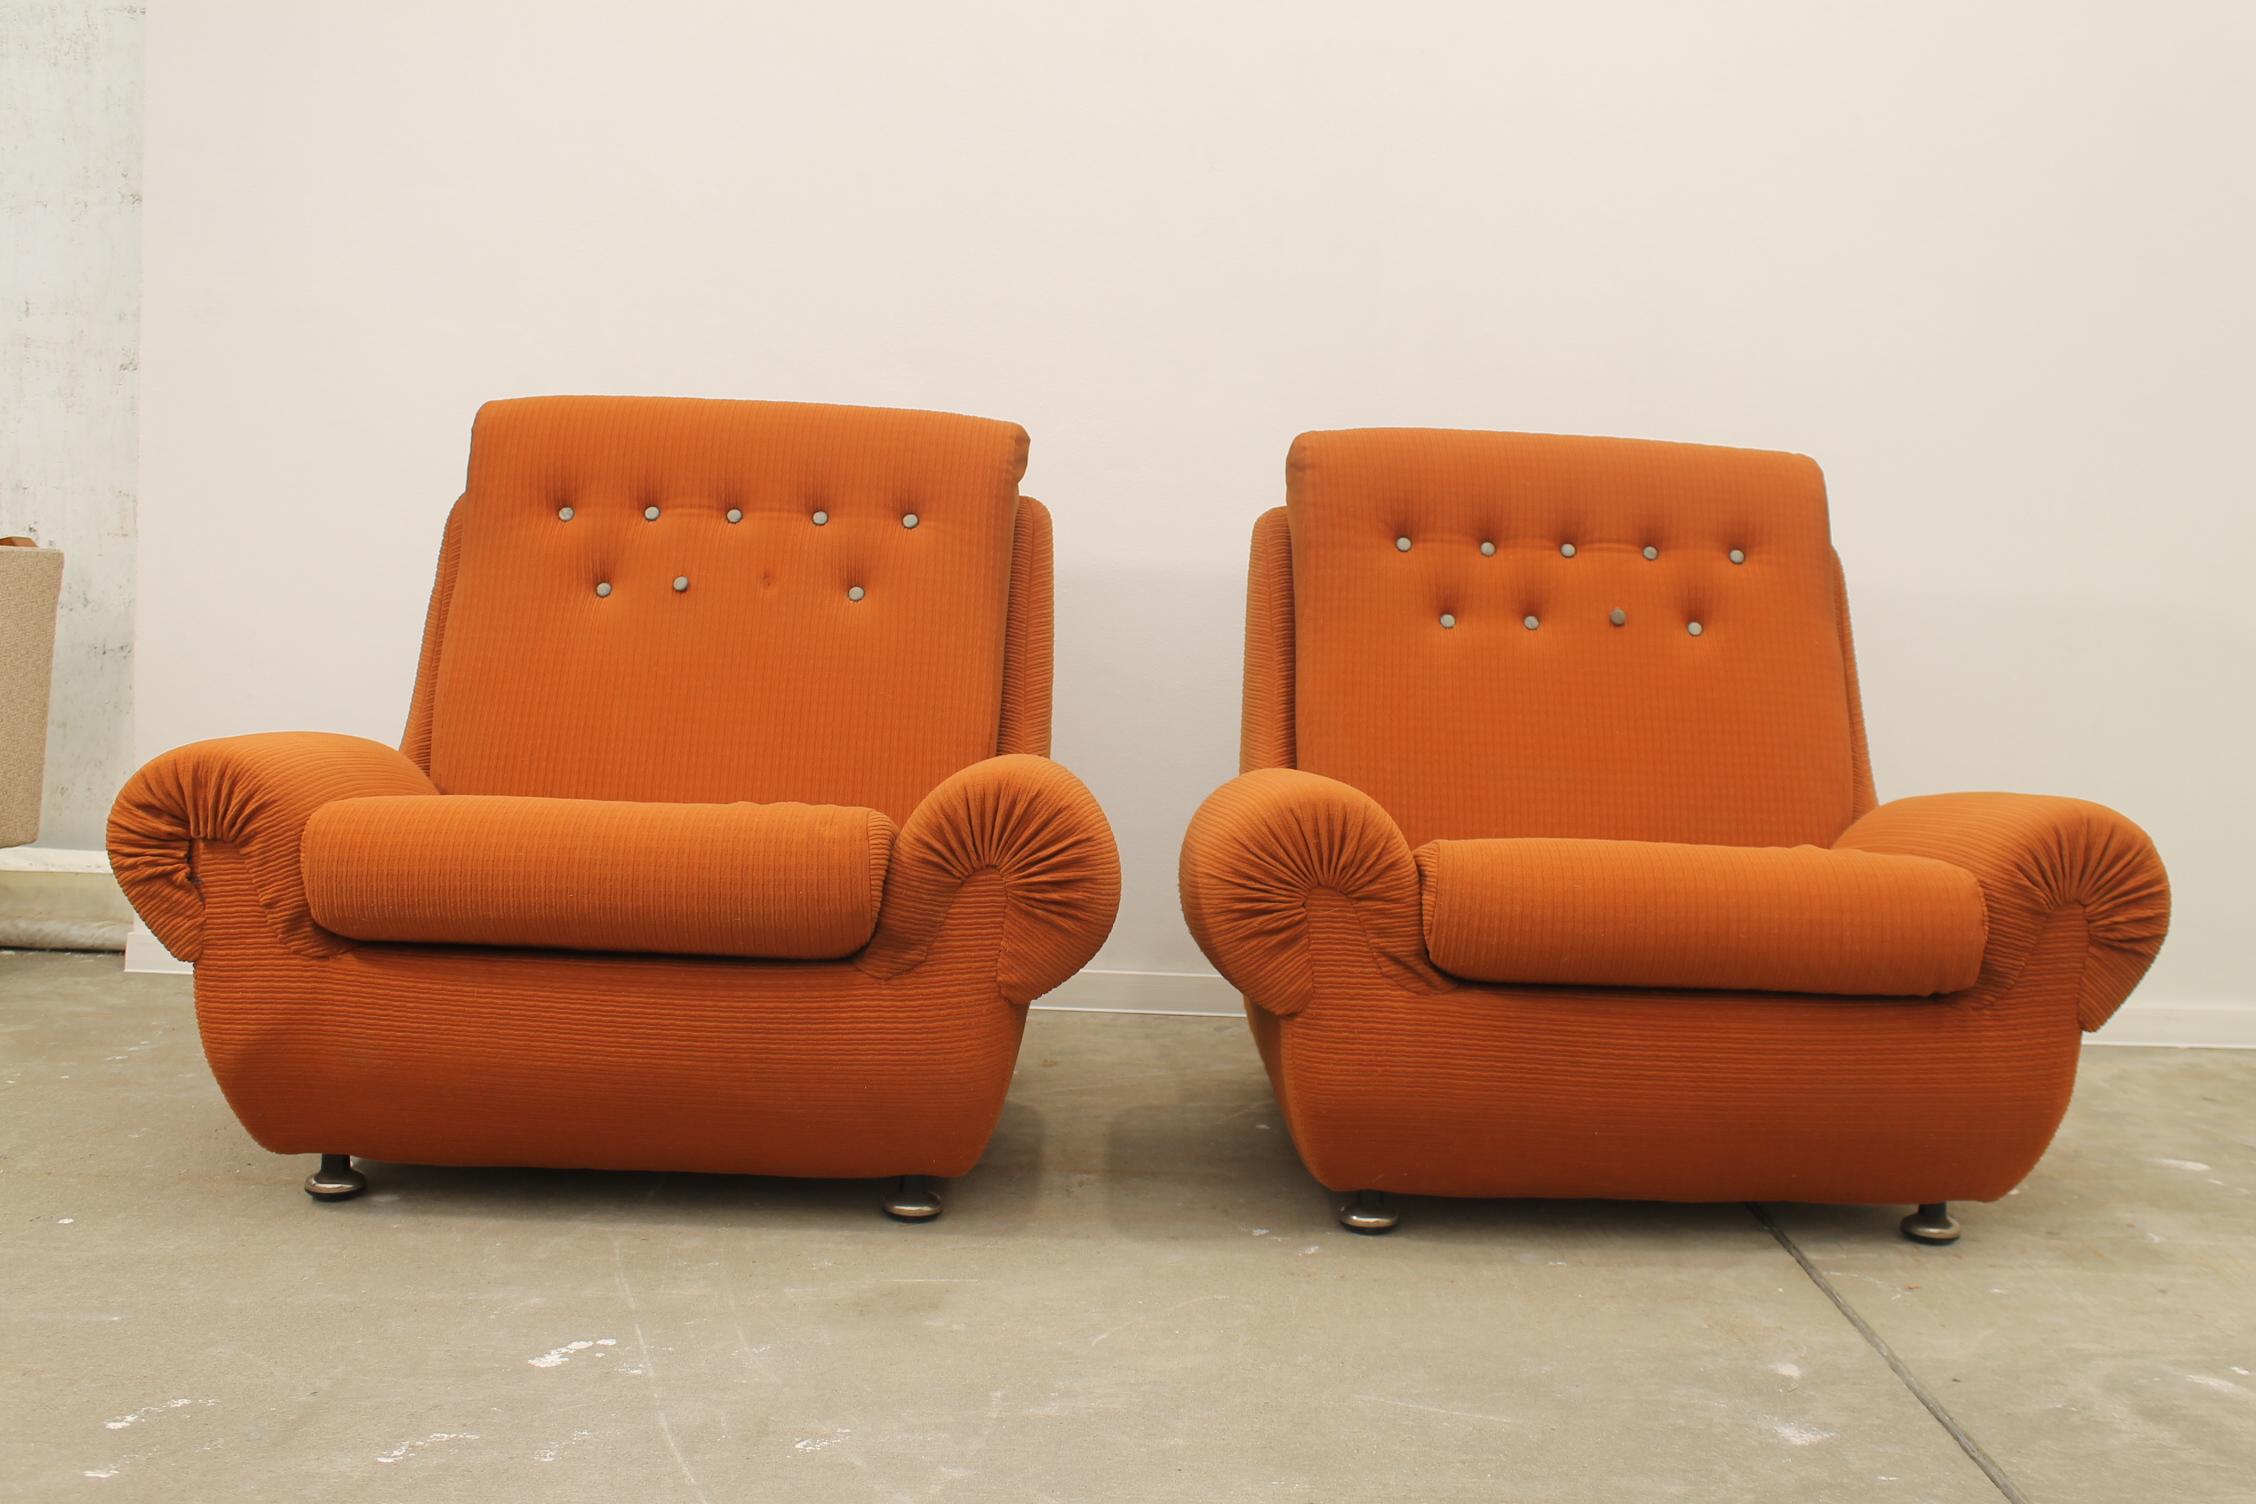 Eastern Bloc Vintage armchairs by Jitona, Czechoslovakia, 1970s For Sale 3